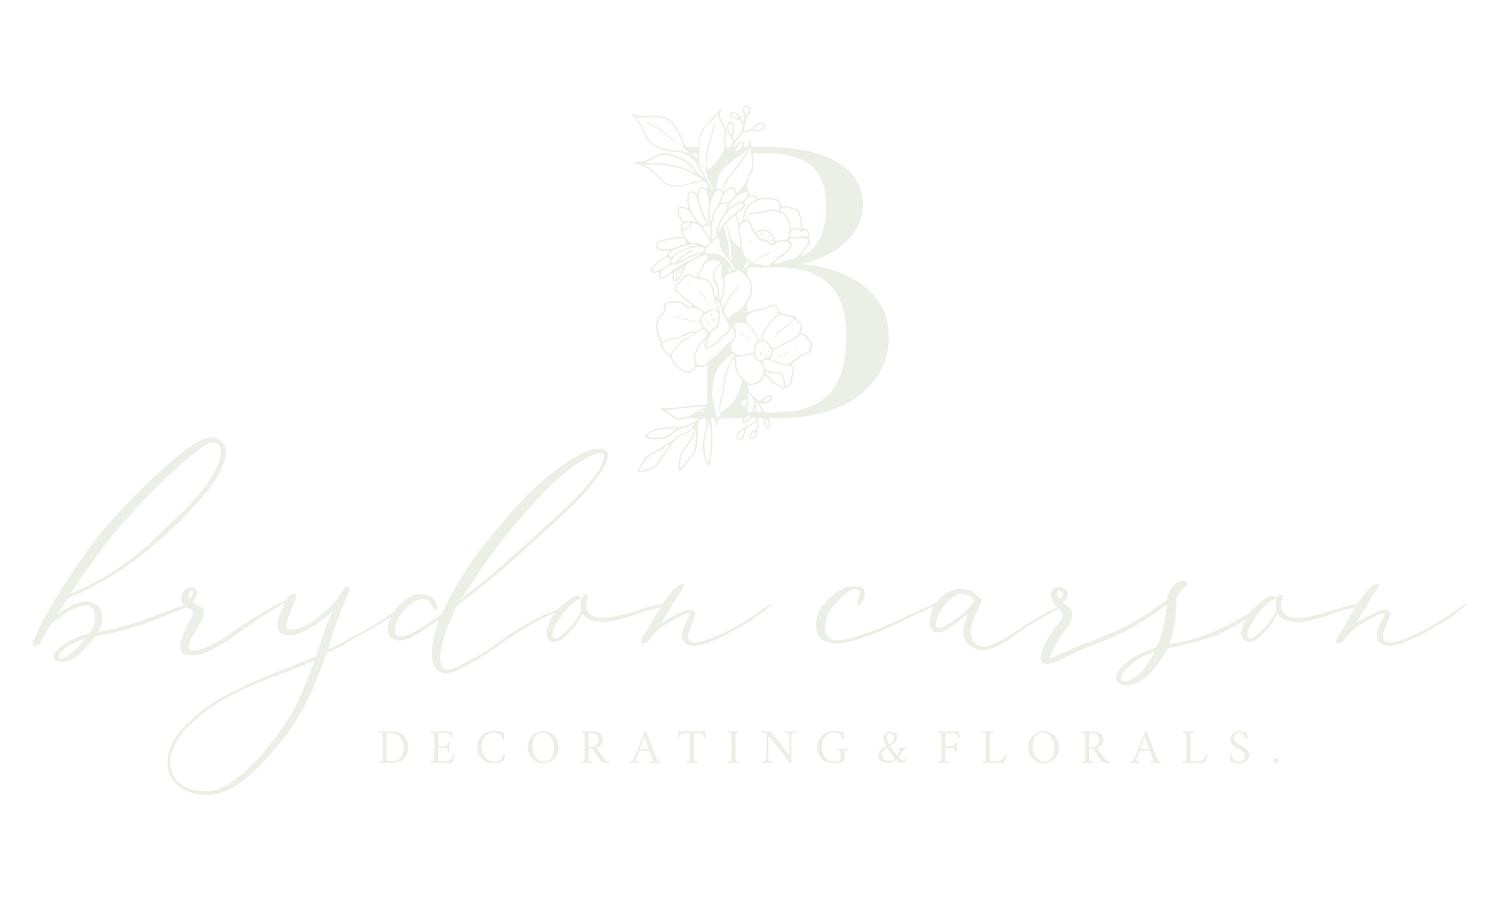 Brydon Carson Decorating &amp; Florals 